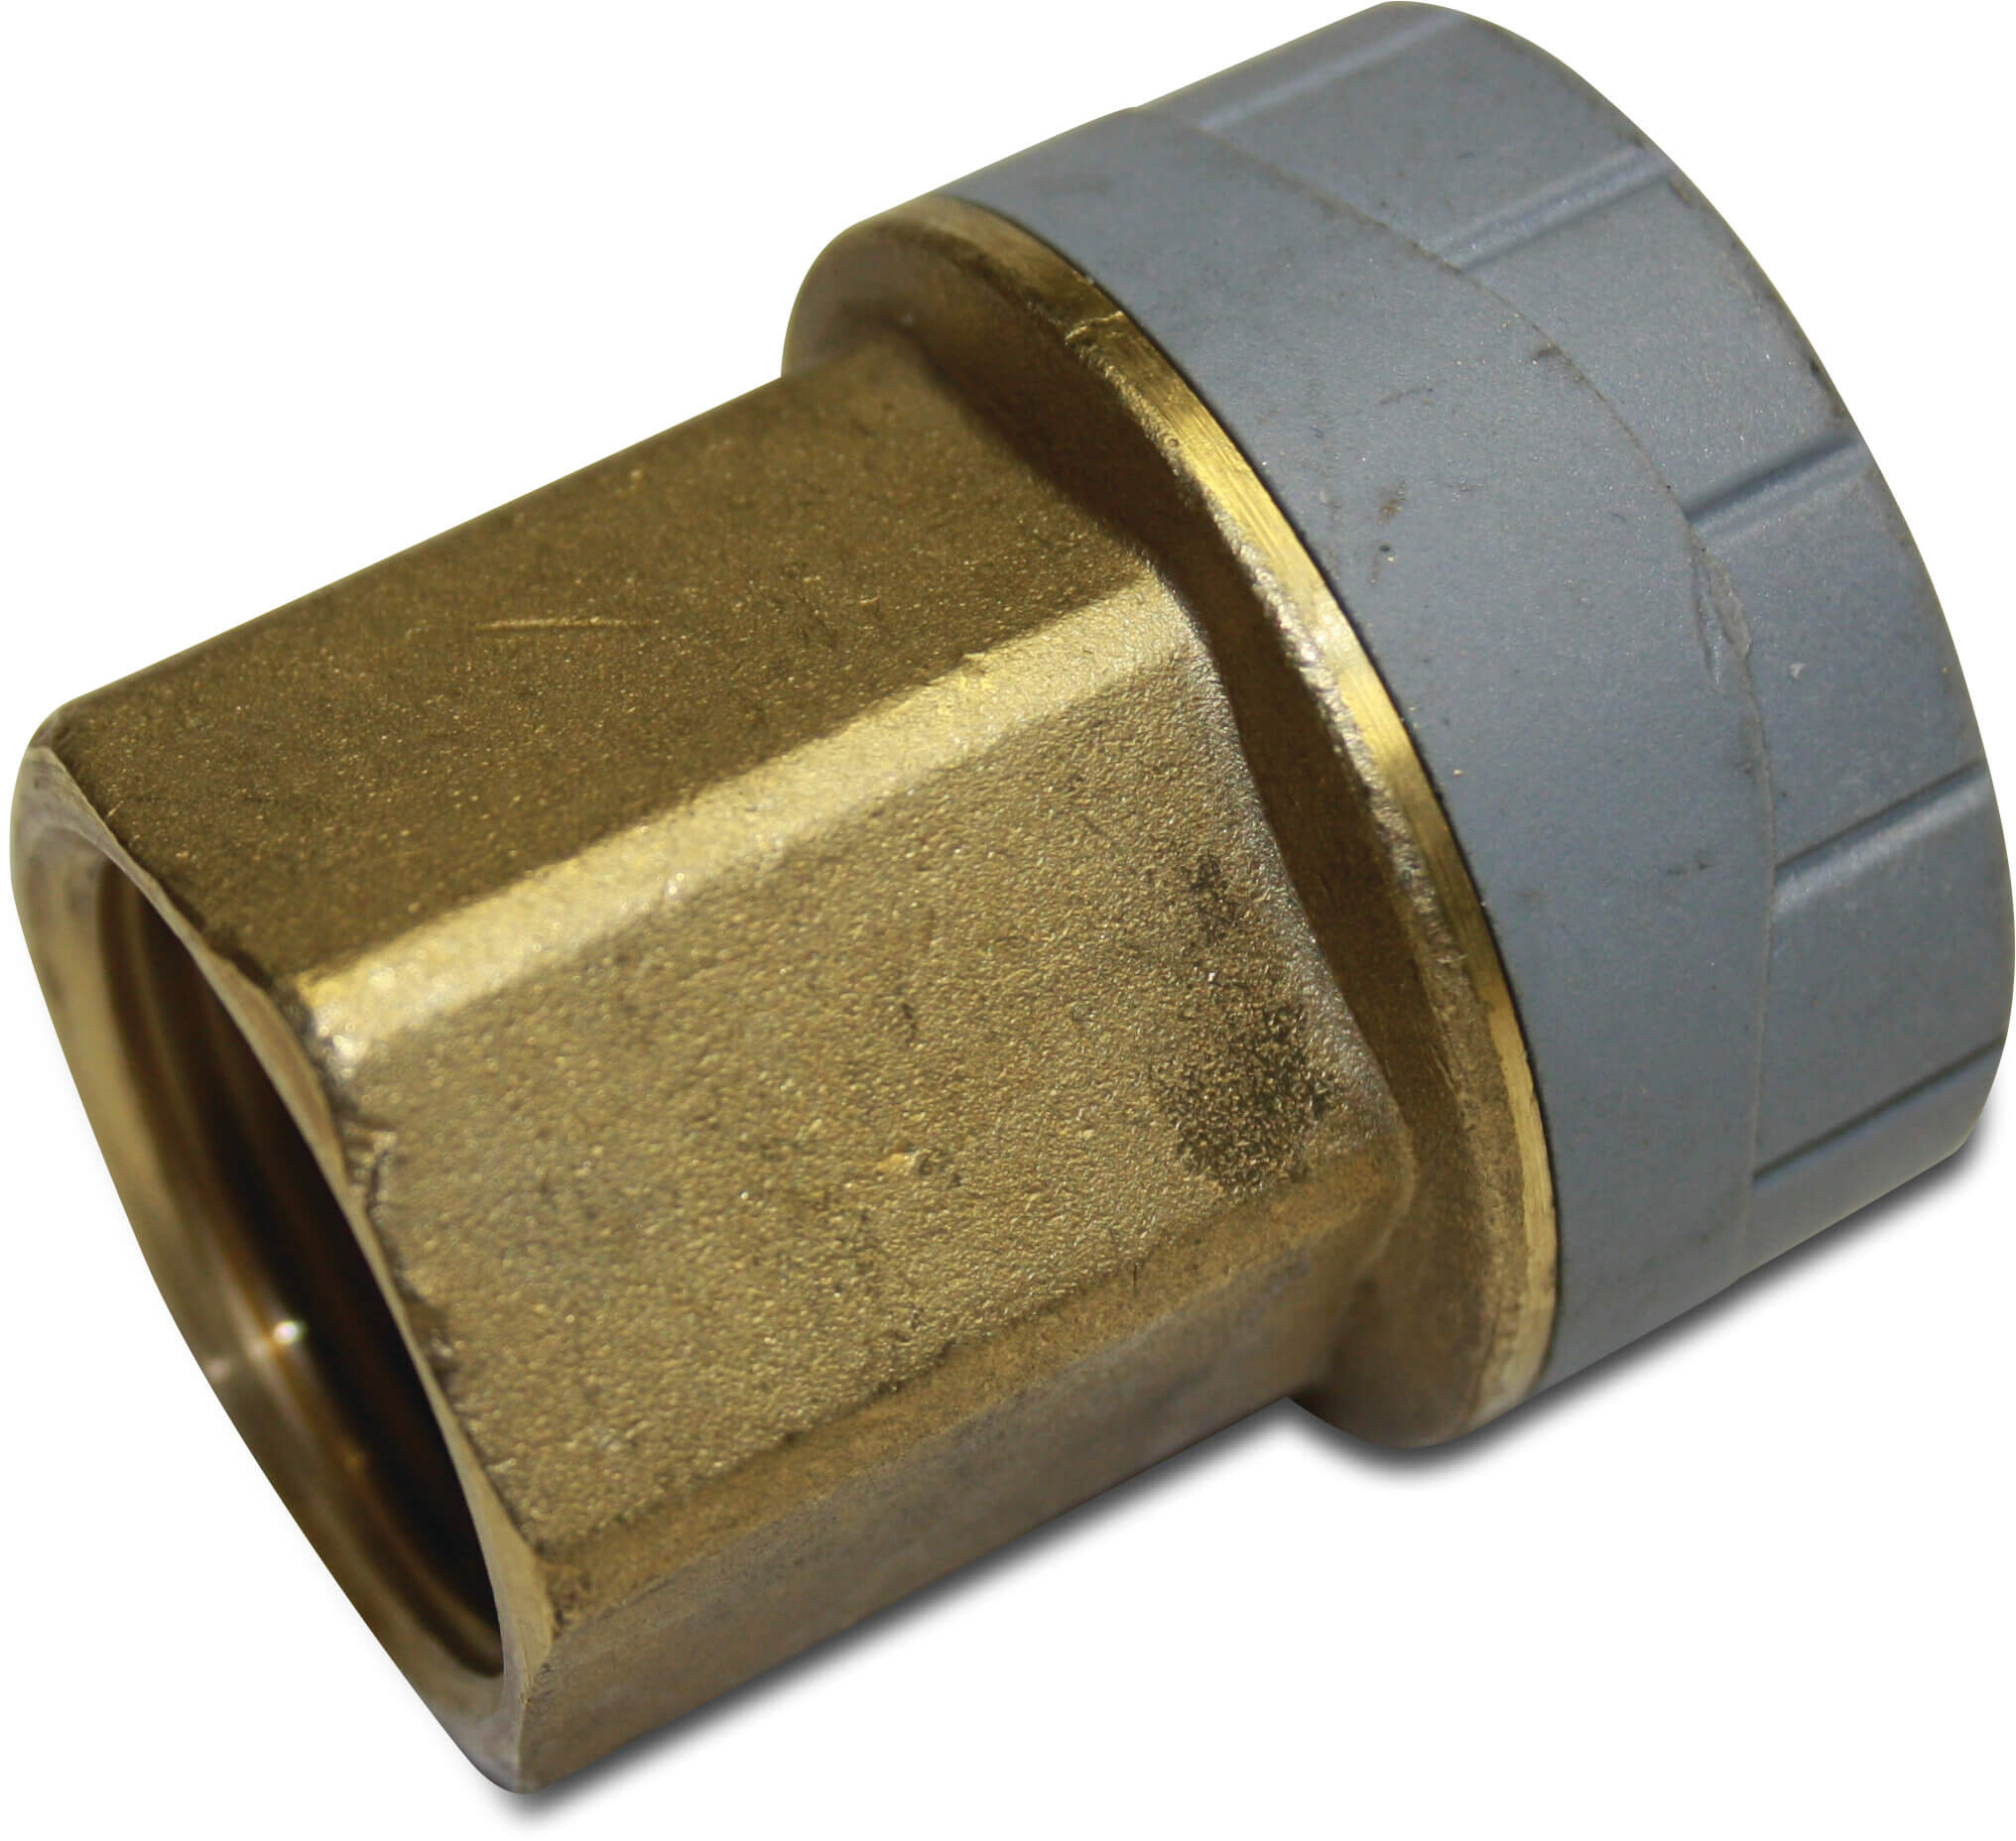 Twin pipe adaptor socket polybutylene 22 mm x 3/4" push-in x male thread grey